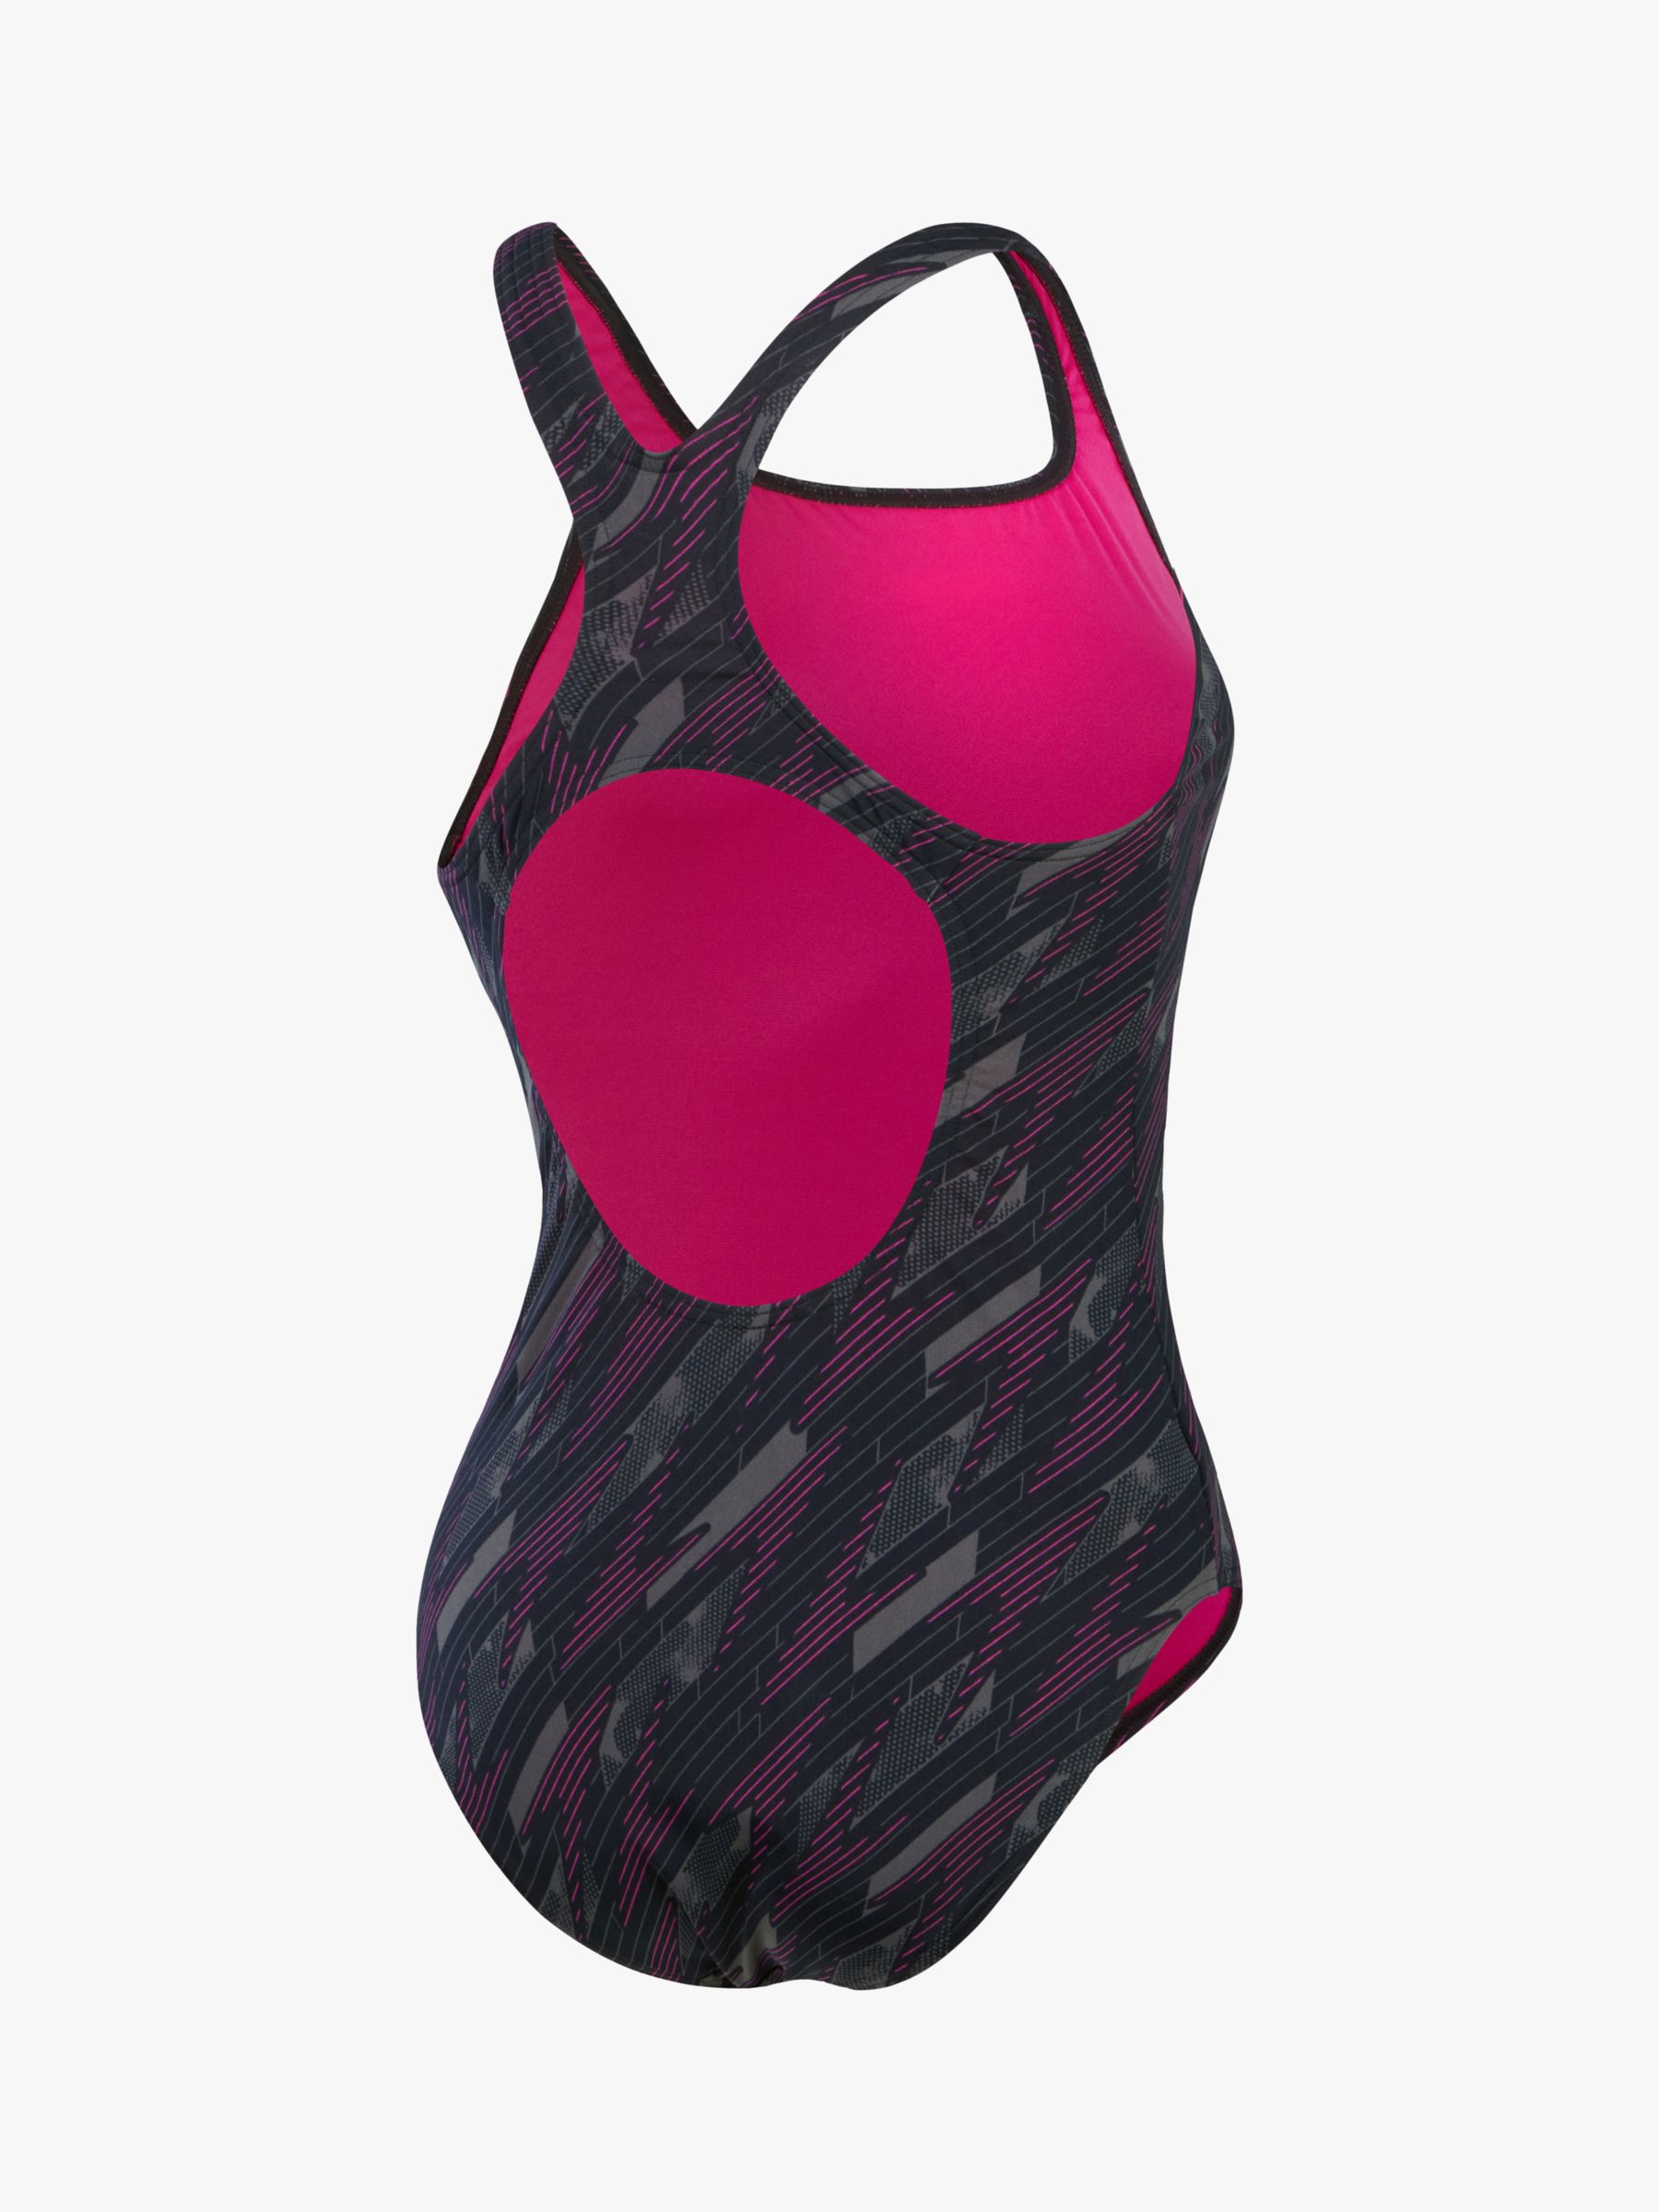 Buy Speedo Hyperboom Medalist Swimsuit, Black/Pink Online at johnlewis.com